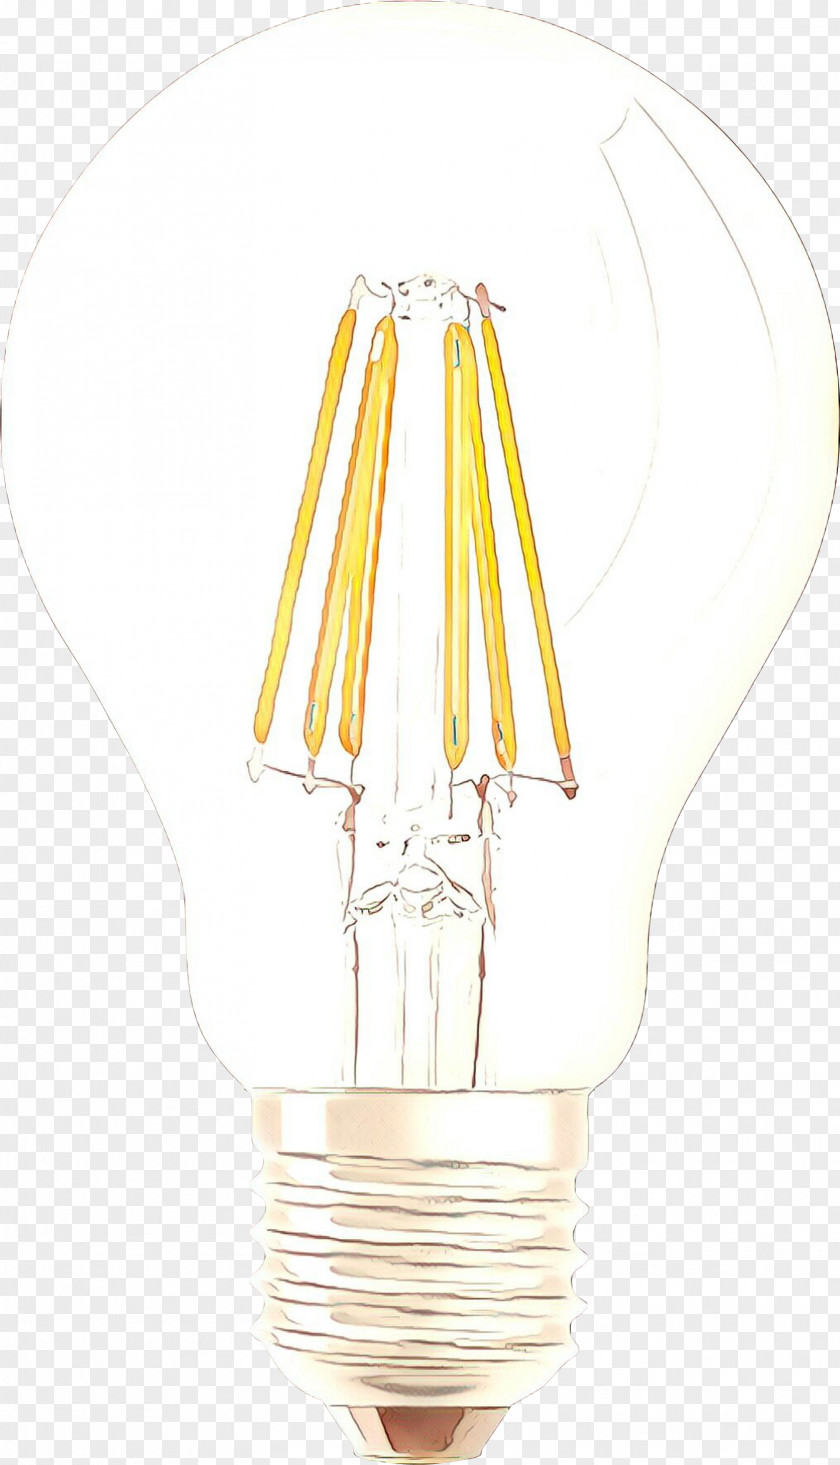 Compact Fluorescent Lamp Light Fixture Bulb PNG